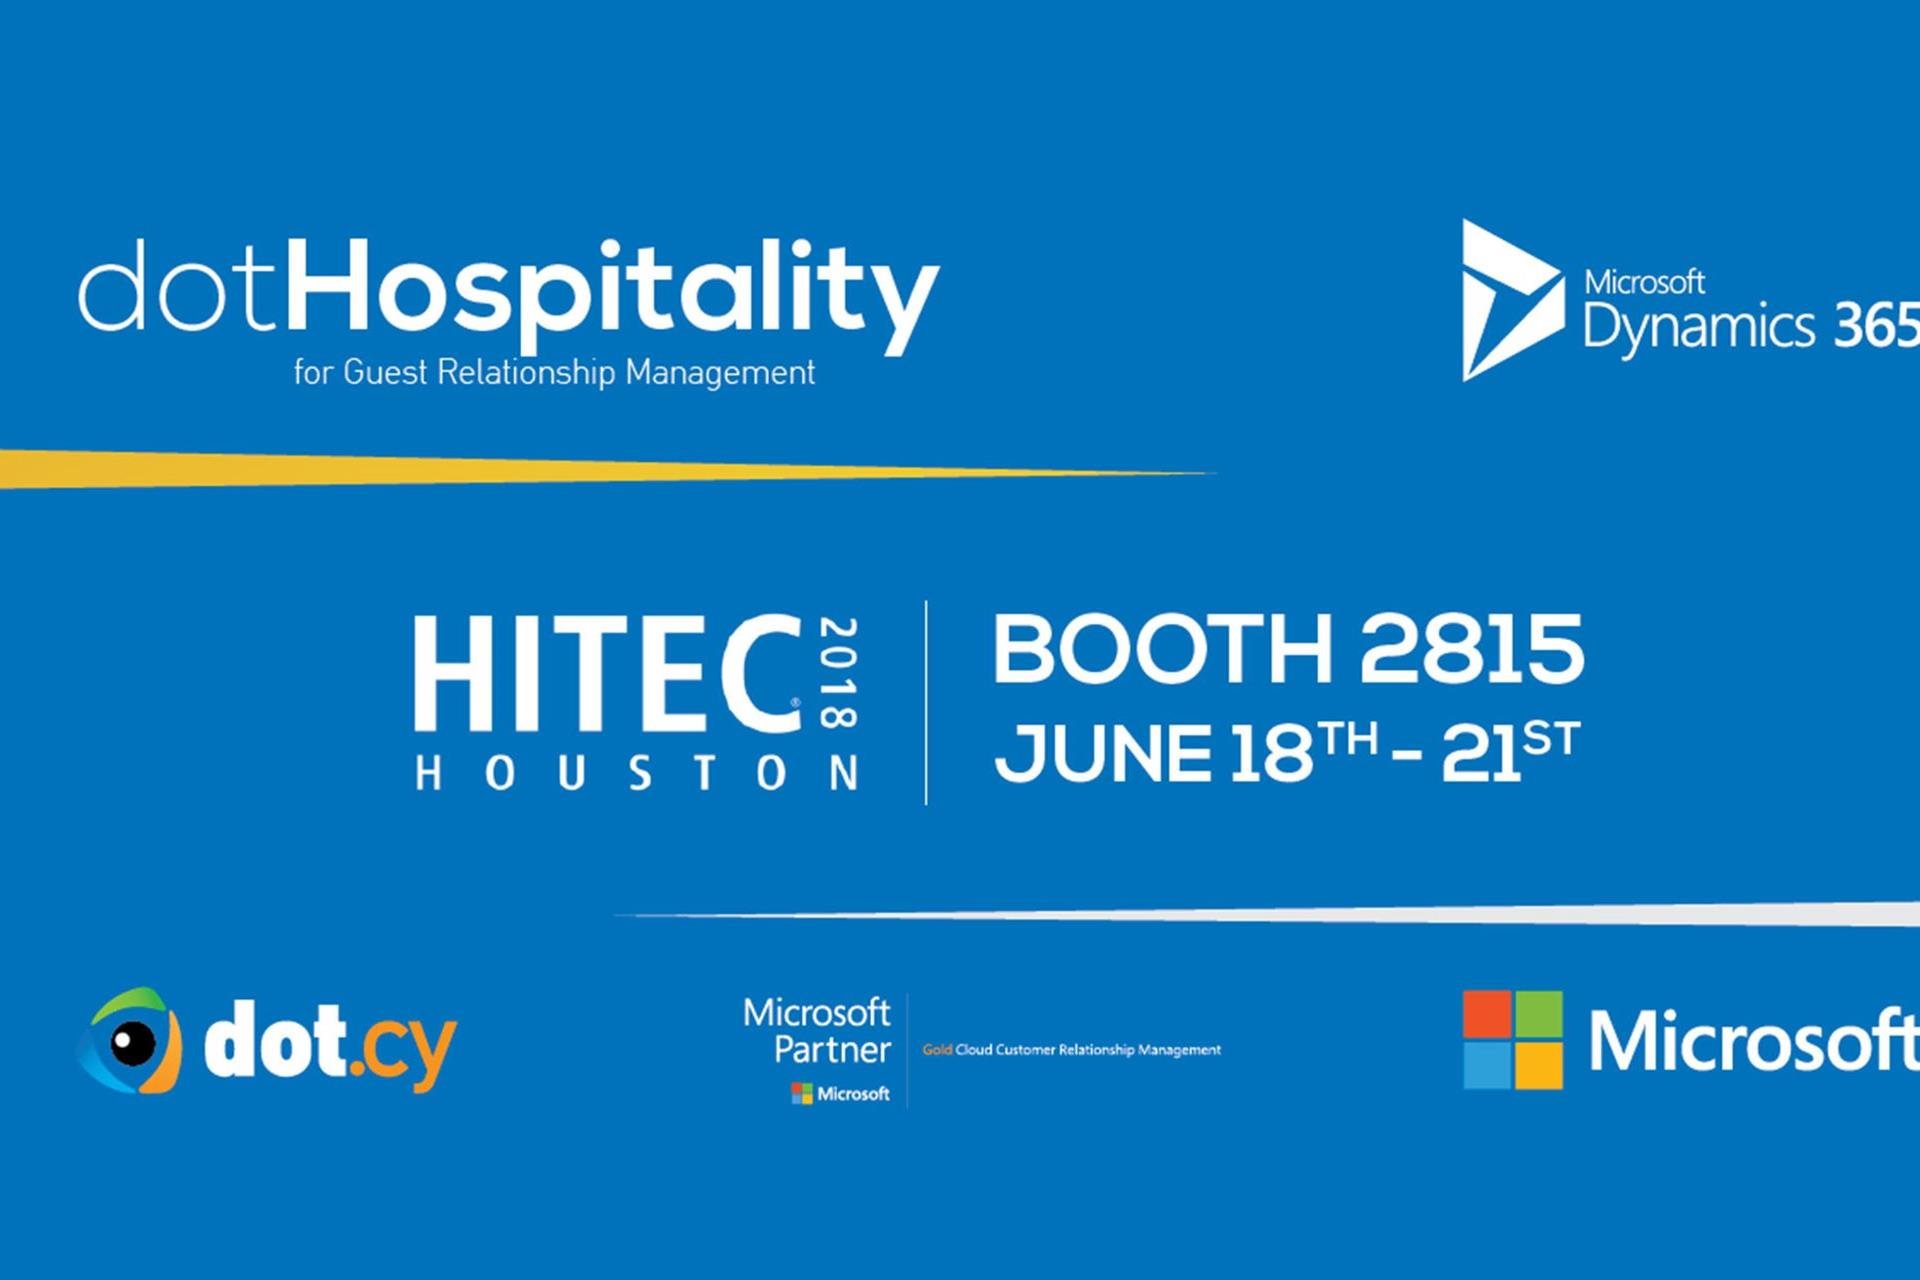 Showcasing dot.Hospitality at HITEC Houston